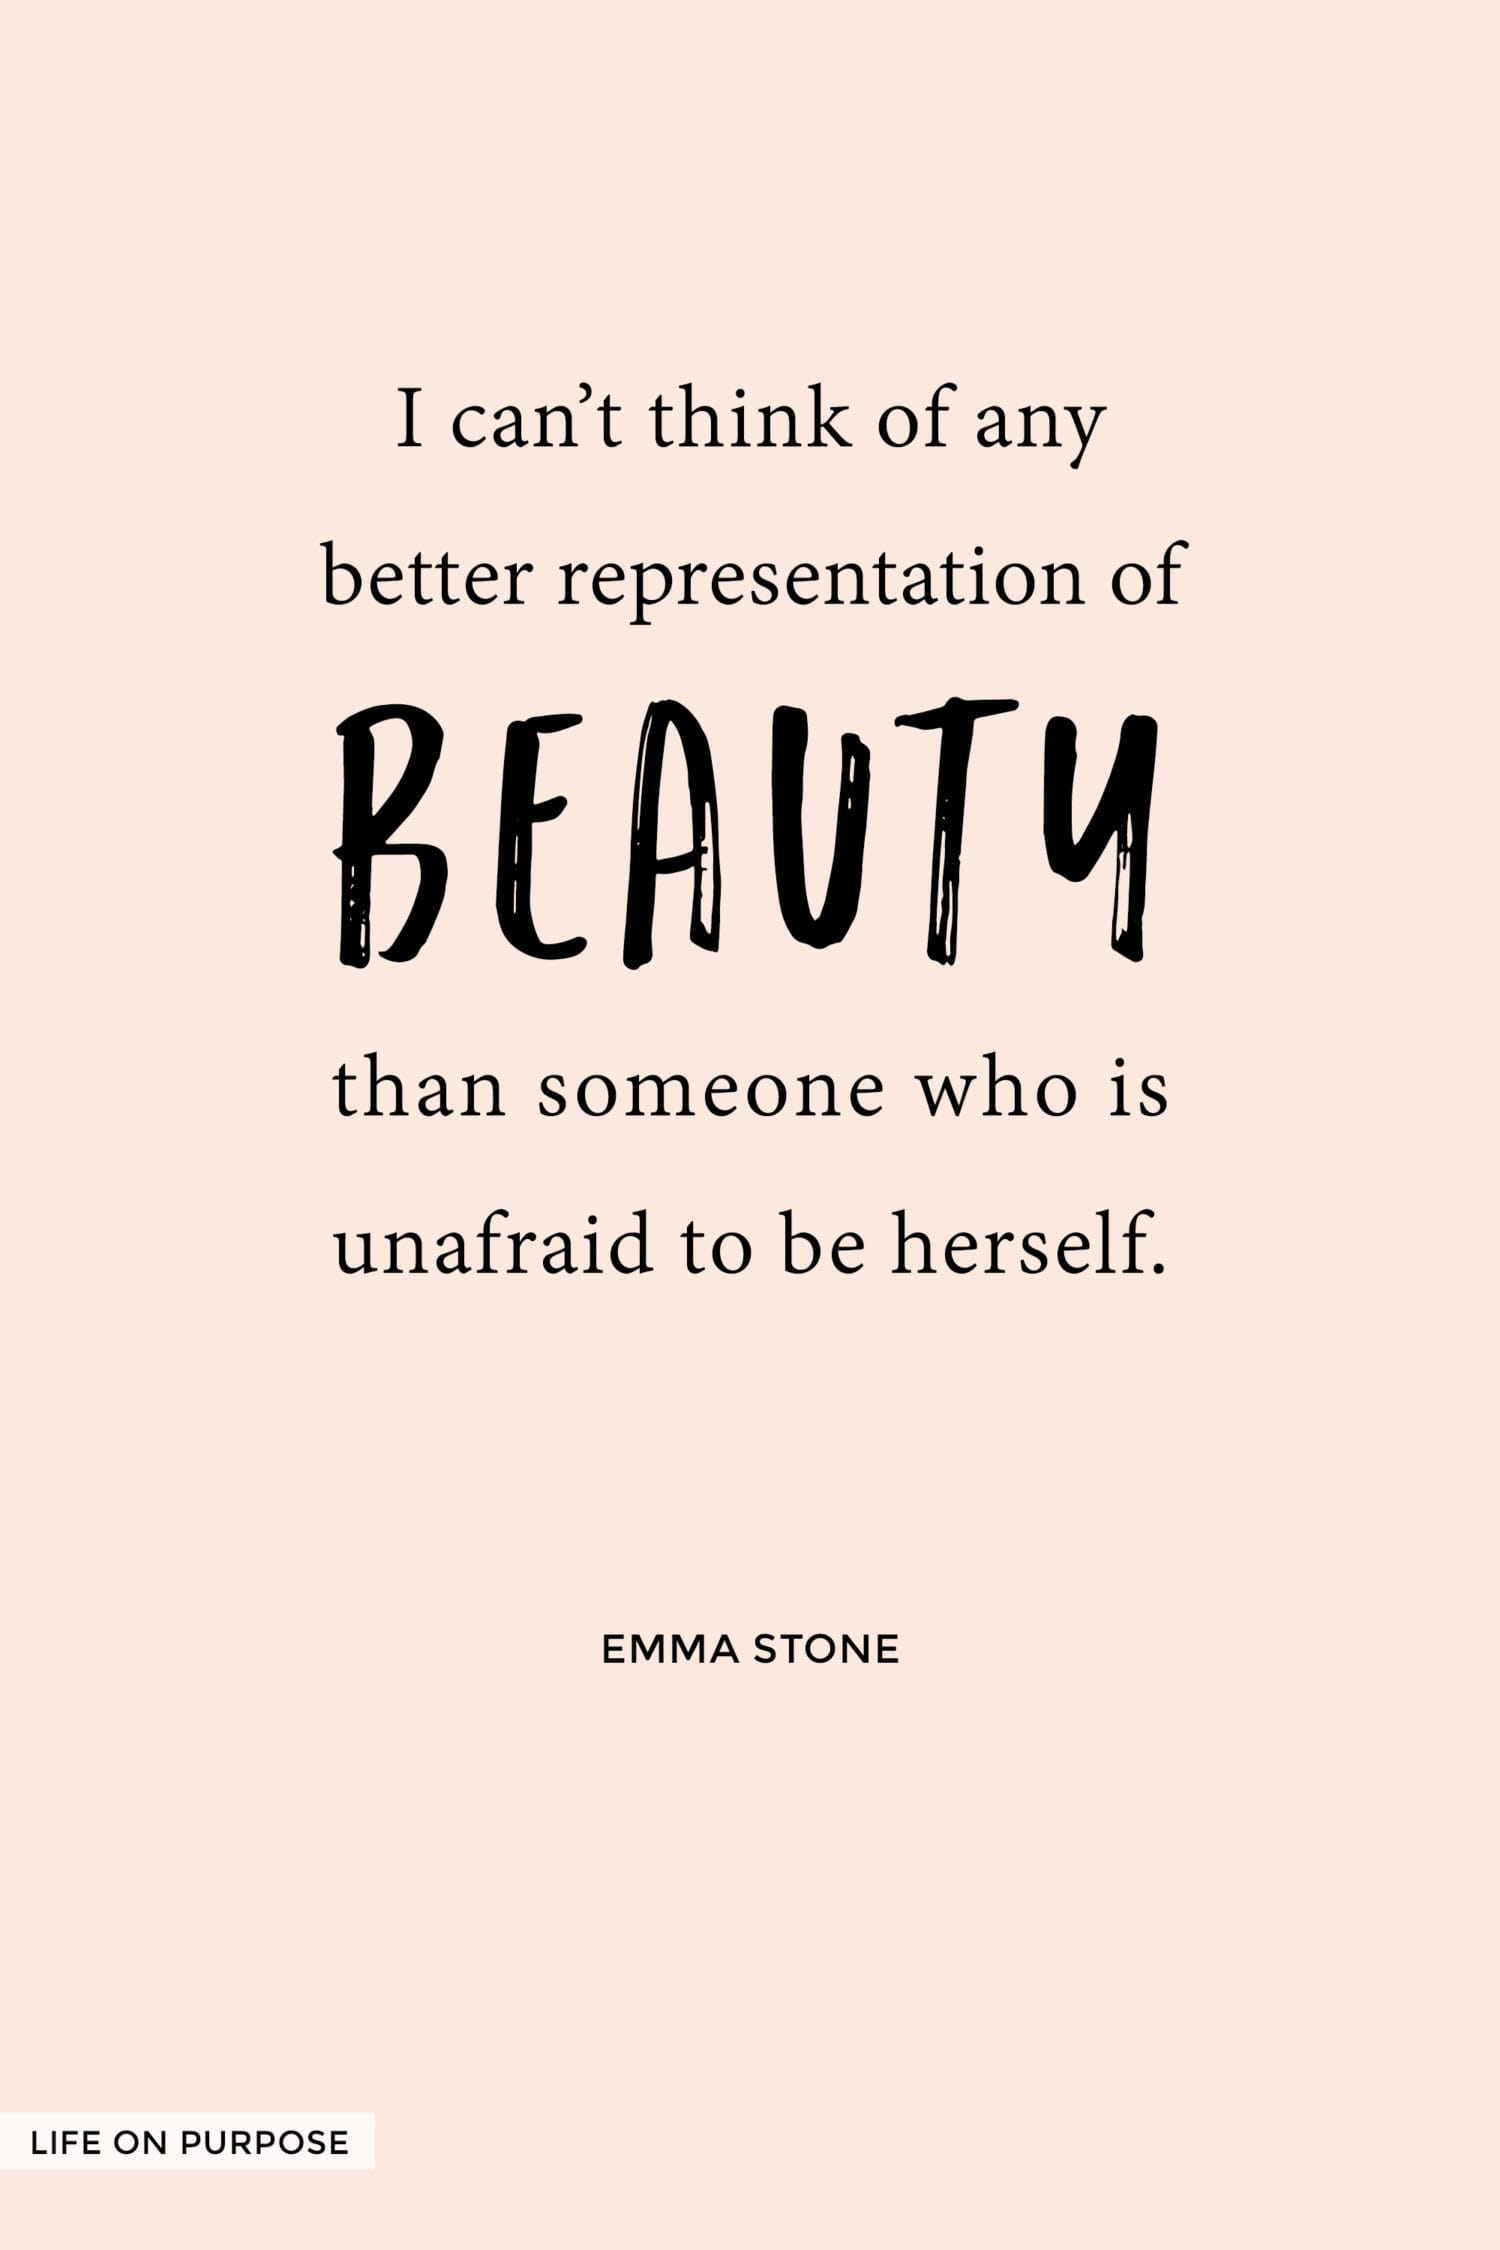 emma stone quotes on life